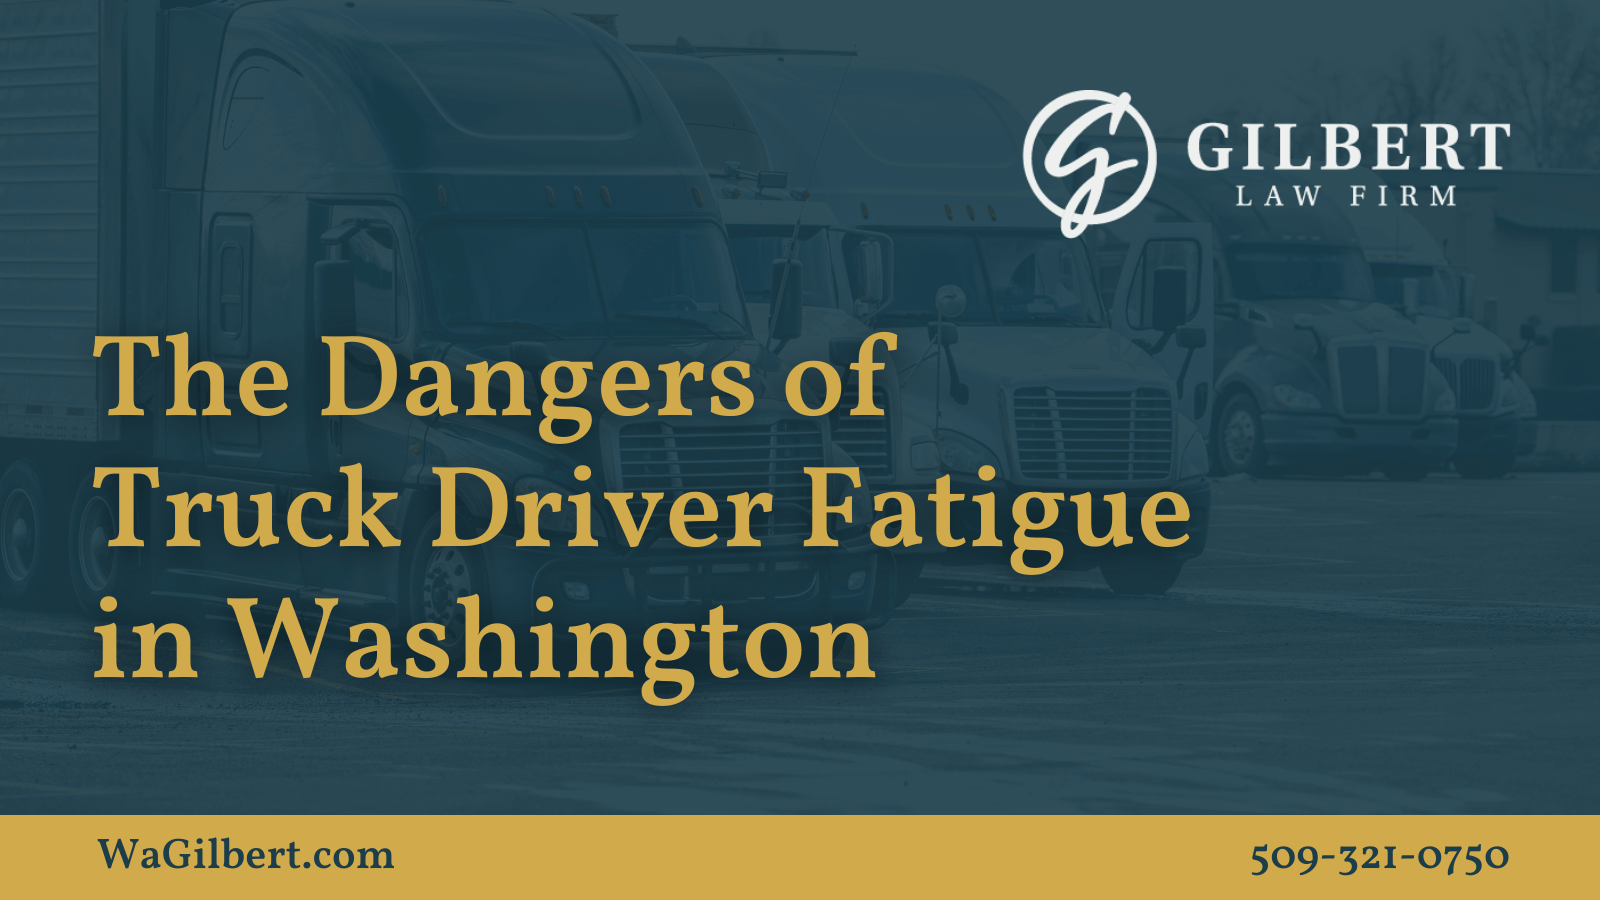 The Dangers of Truck Driver Fatigue in Washington | Gilbert Law Firm Spokane Washington